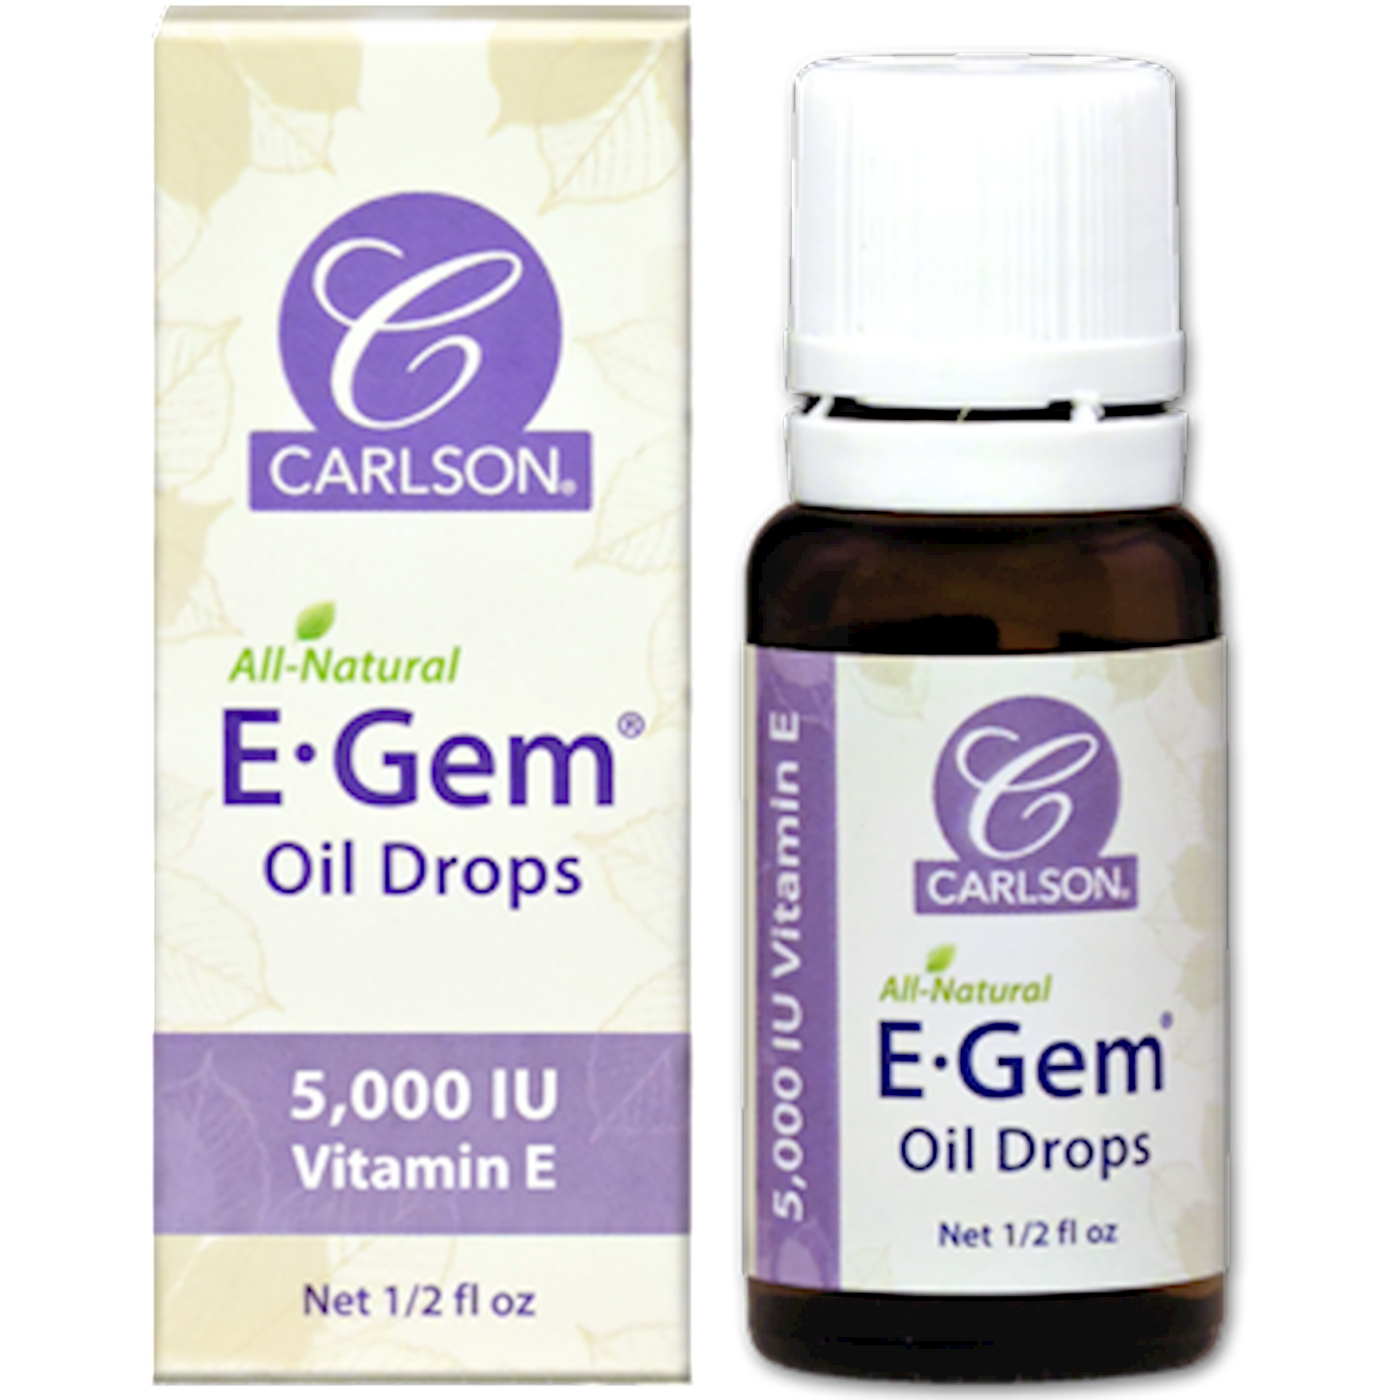 E-Gem Oil Drops 1/2 oz Curated Wellness